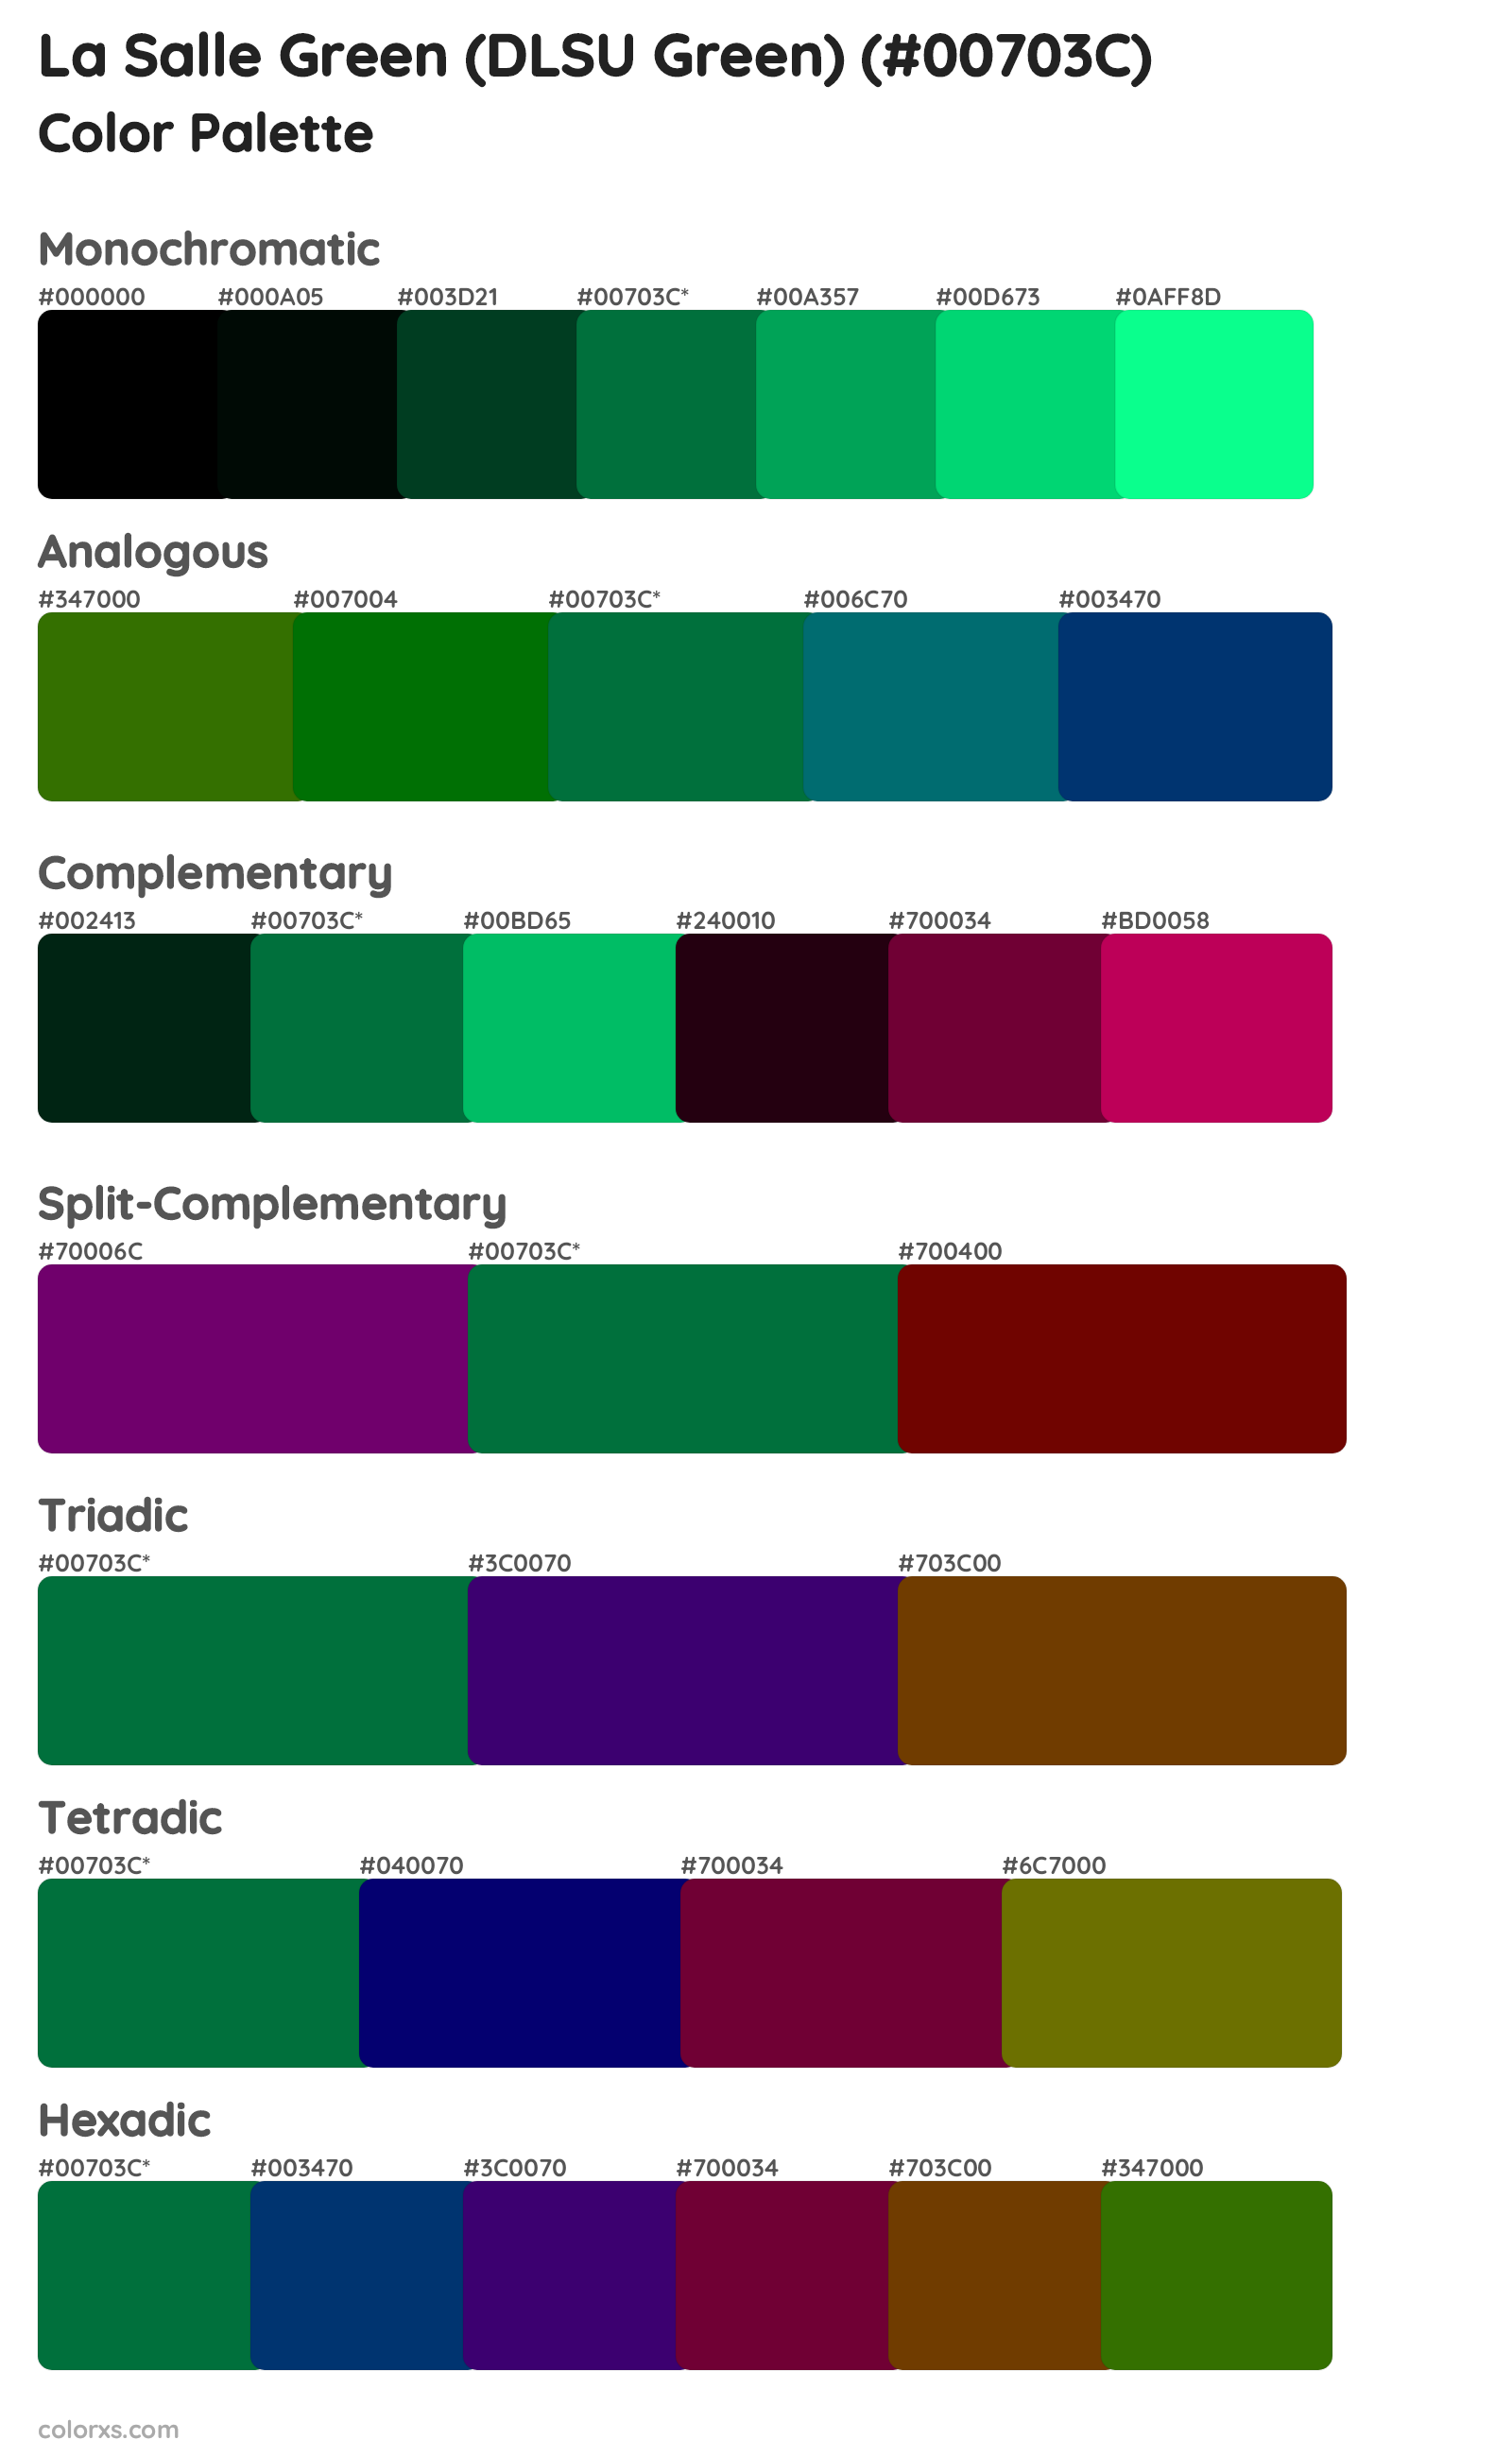 La Salle Green (DLSU Green) Color Scheme Palettes